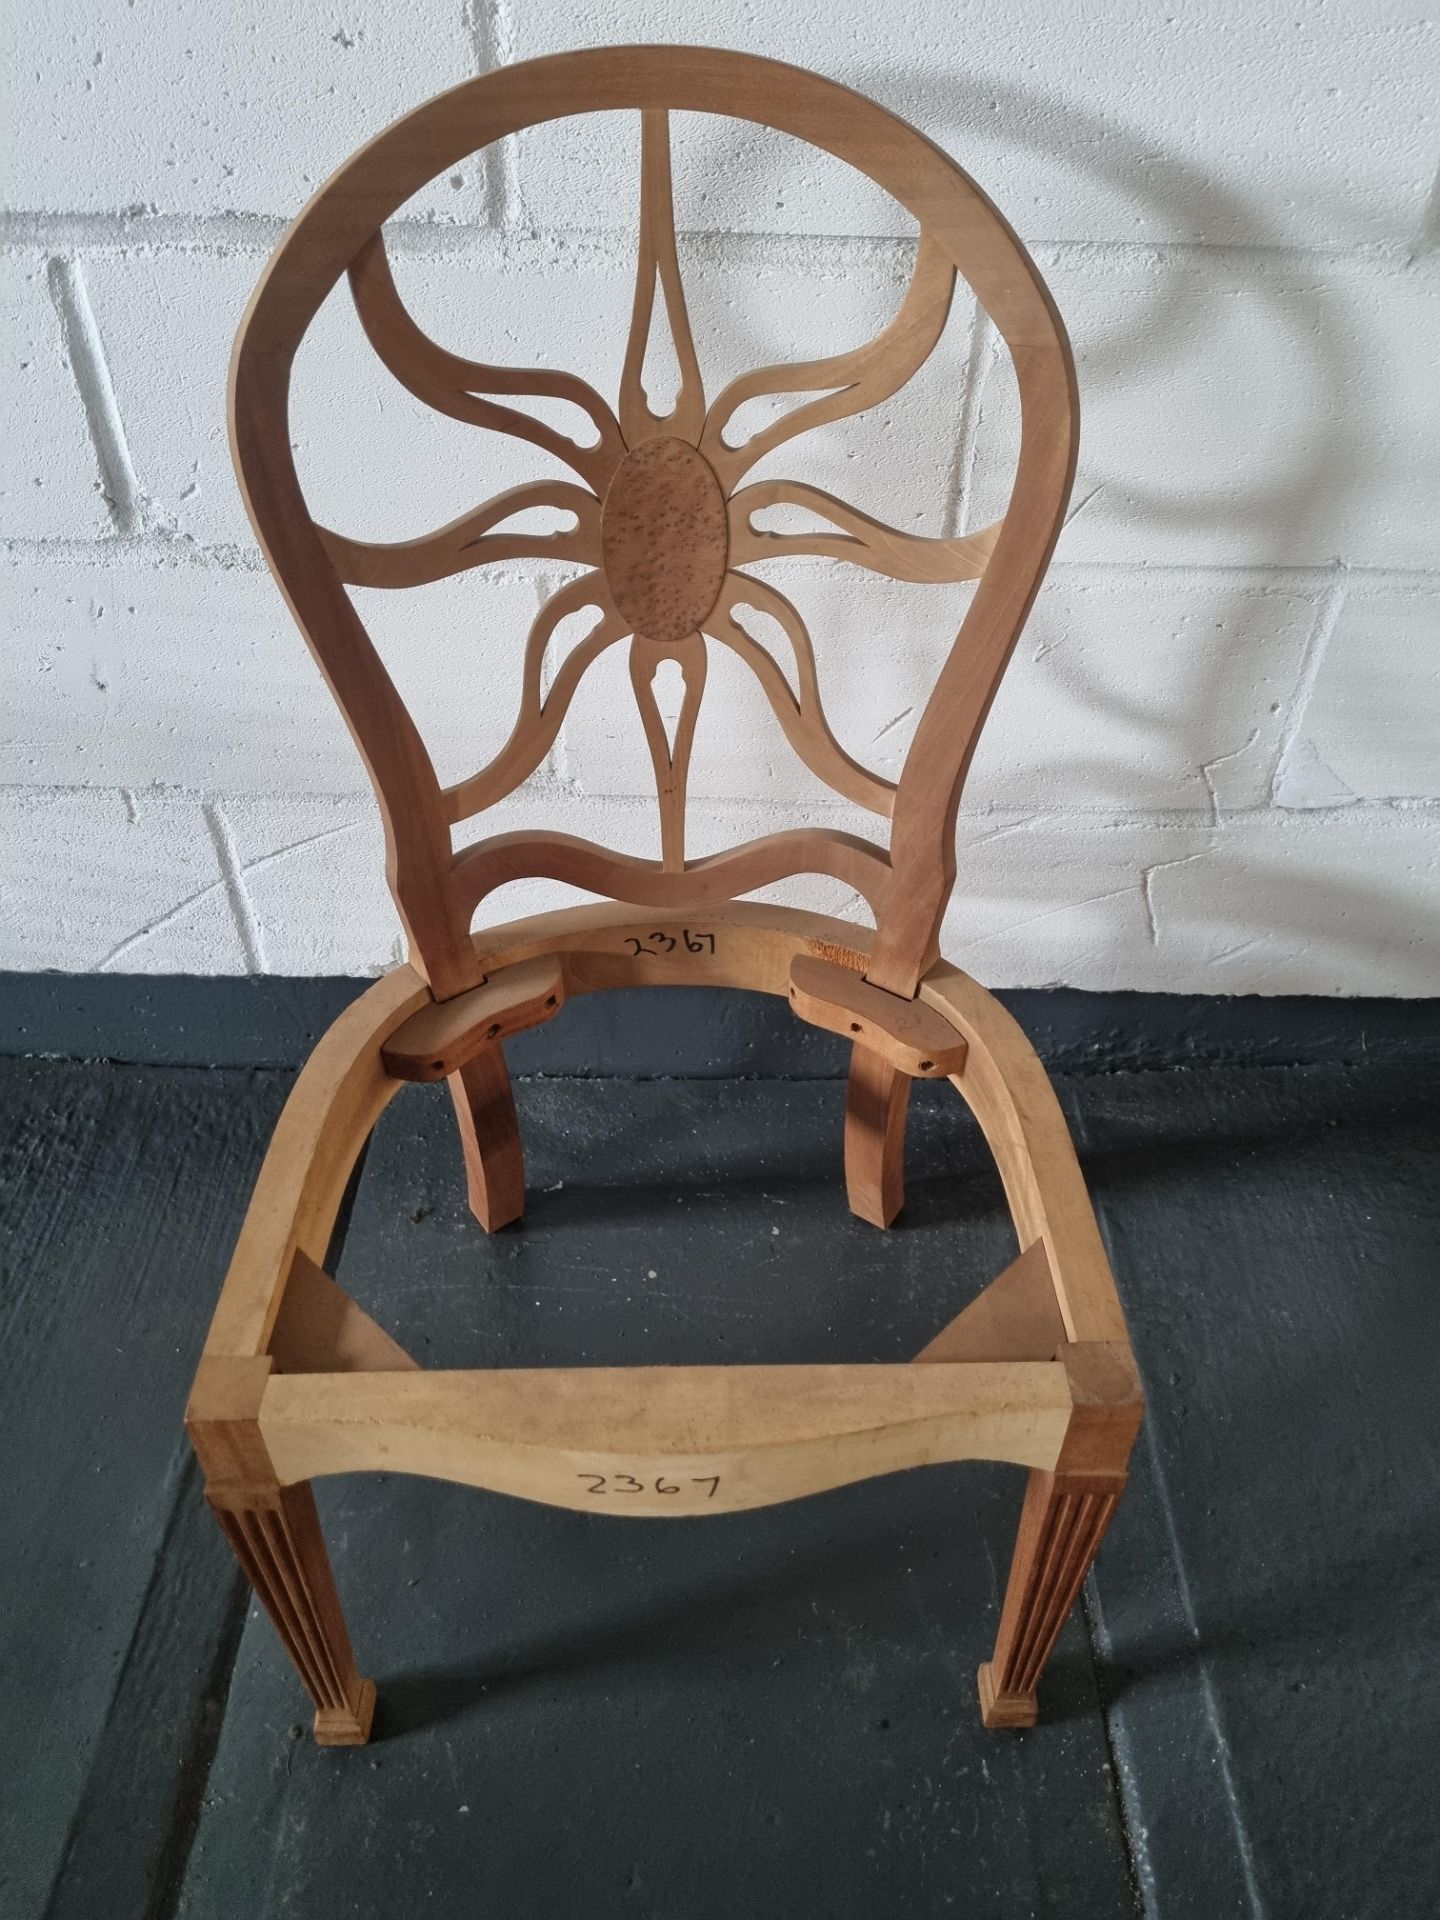 Arthur Brett Unupholstered & Unfinished Sunburst Side Chair George III Style The Unusual Design